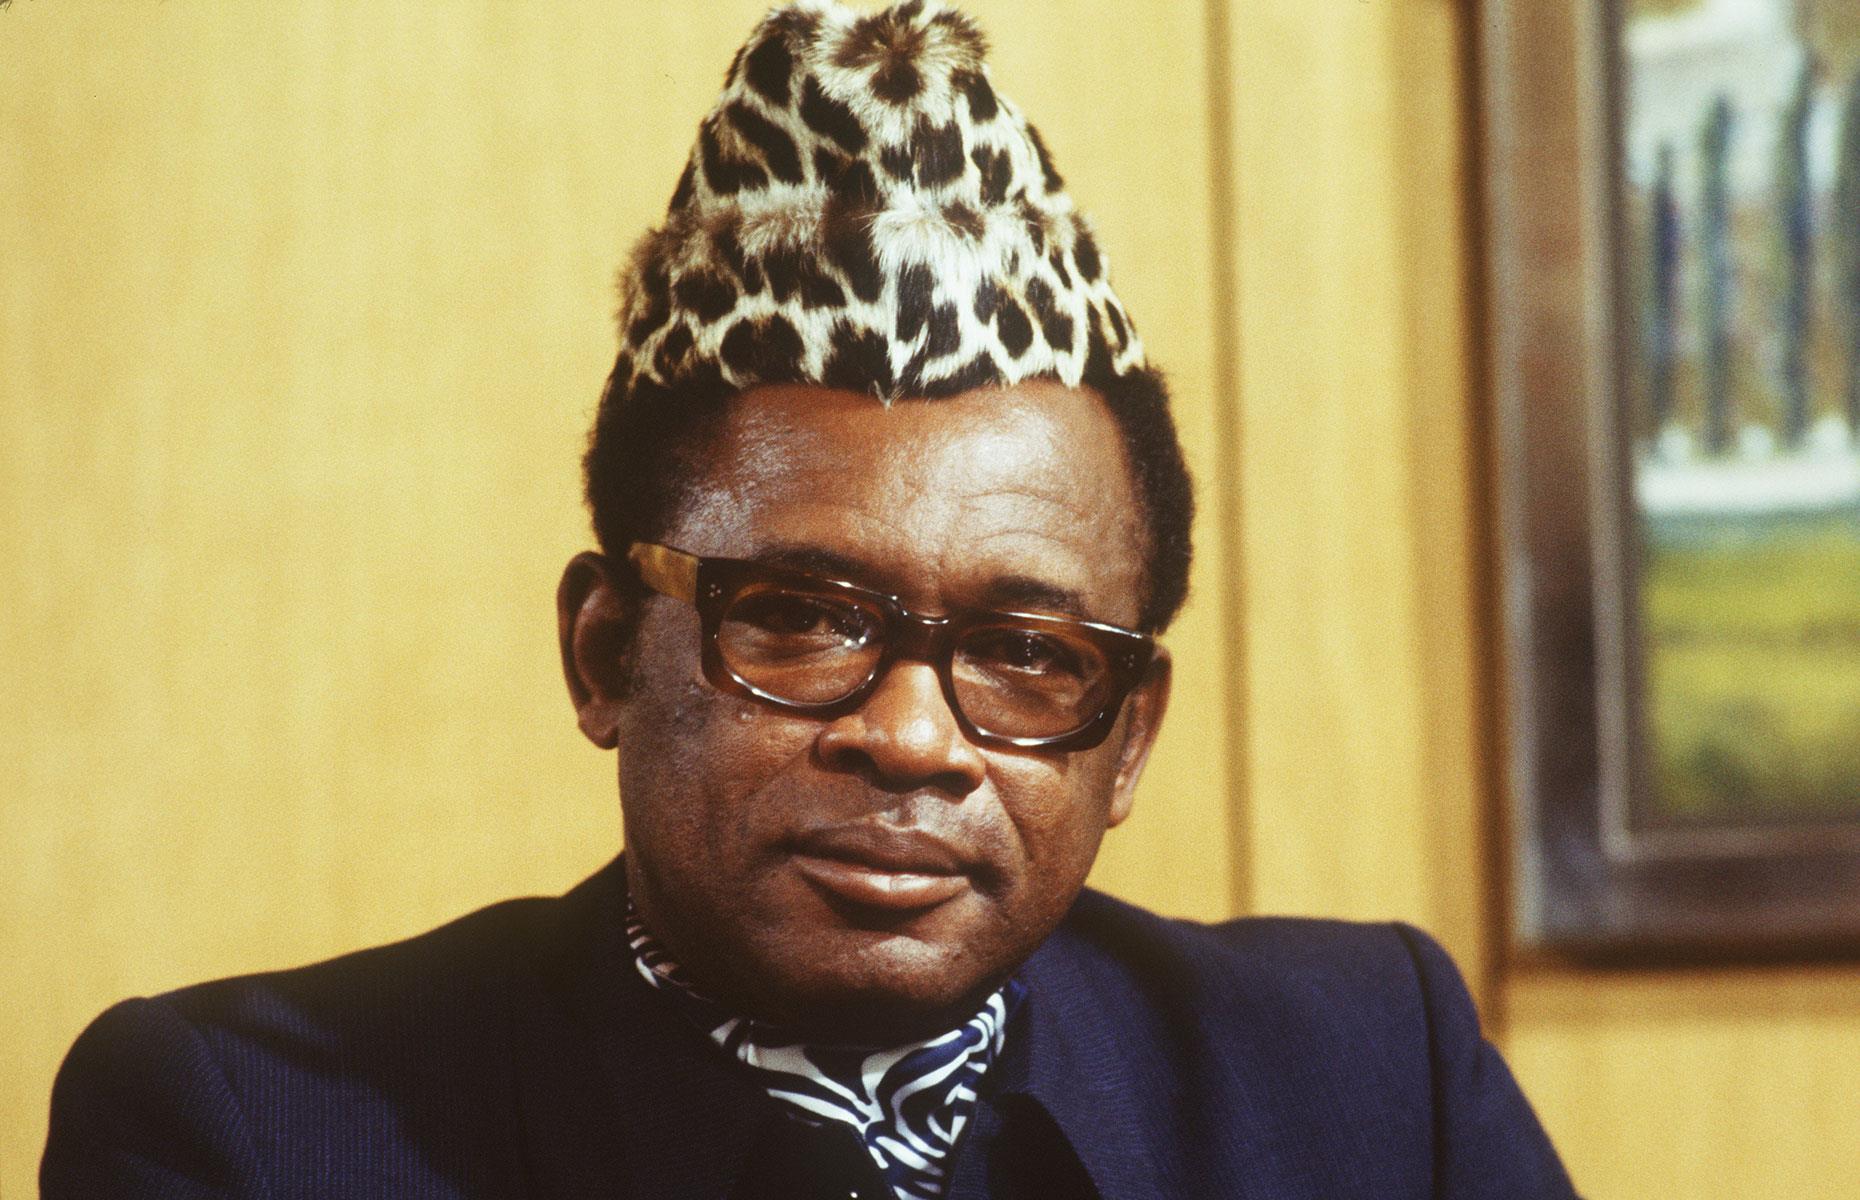 Мобуту сесе секо. Мобуту Сесе Секо диктатор. Жозеф-Дезире Мобуту.